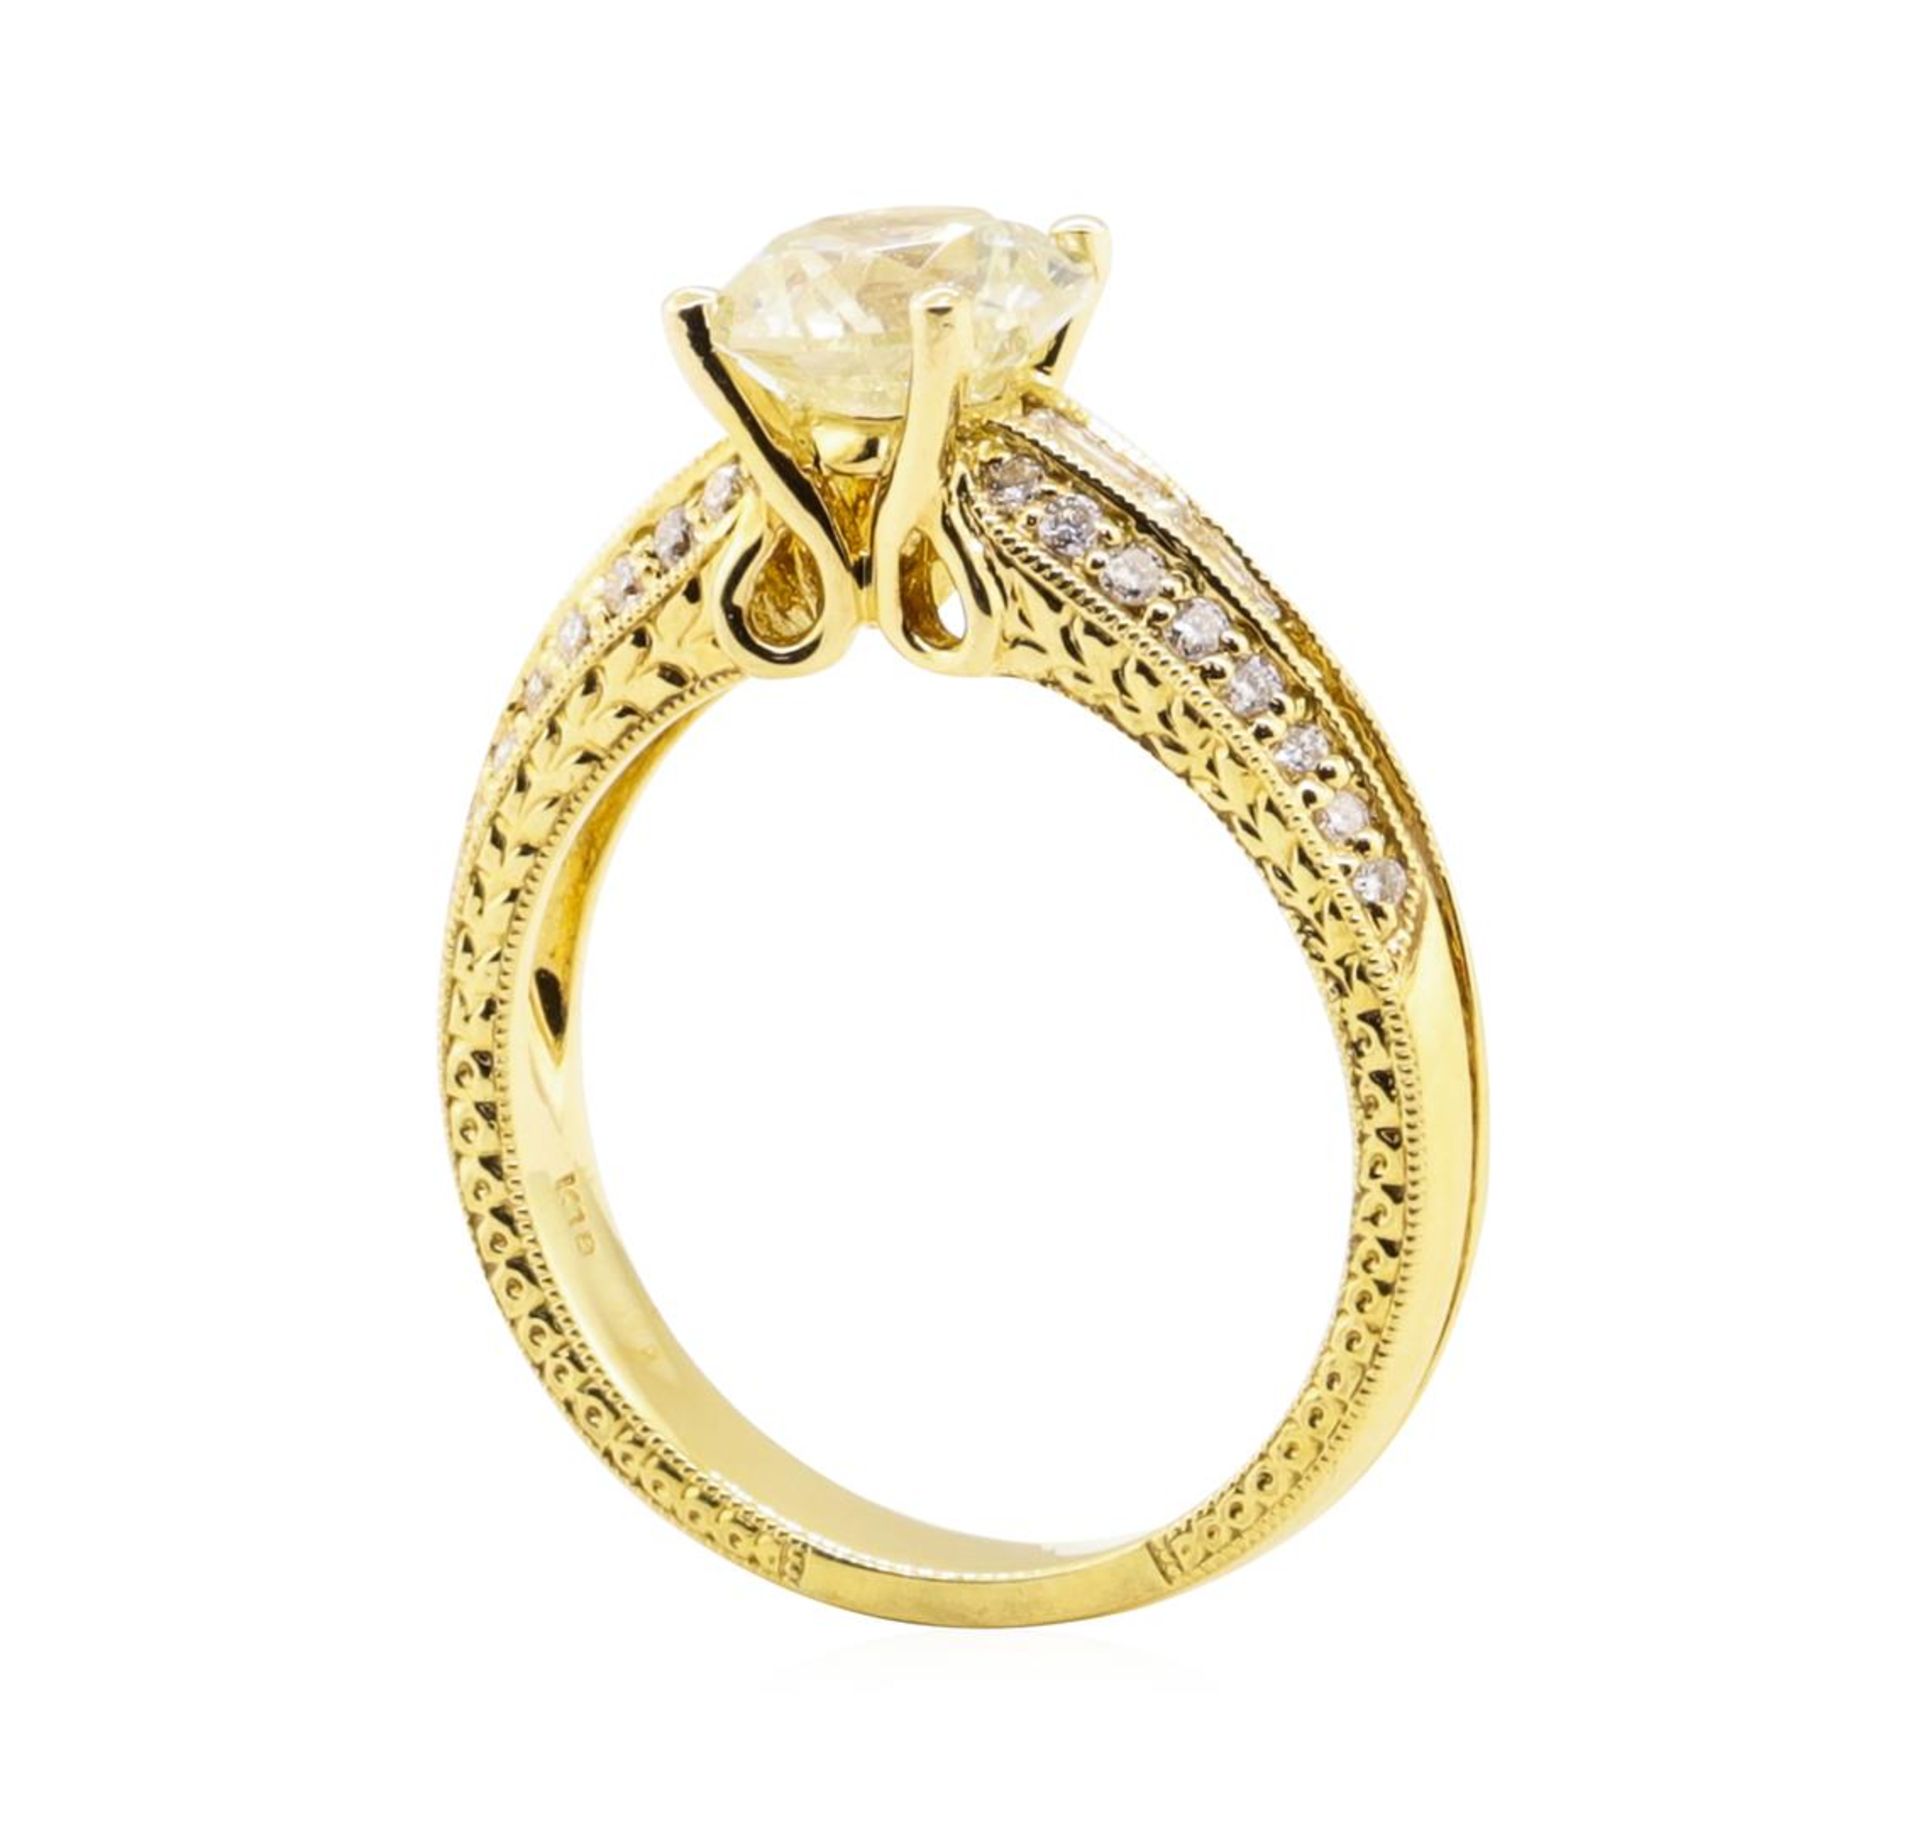 1.67 ctw Diamond Ring - 18KT Yellow Gold - Image 4 of 5